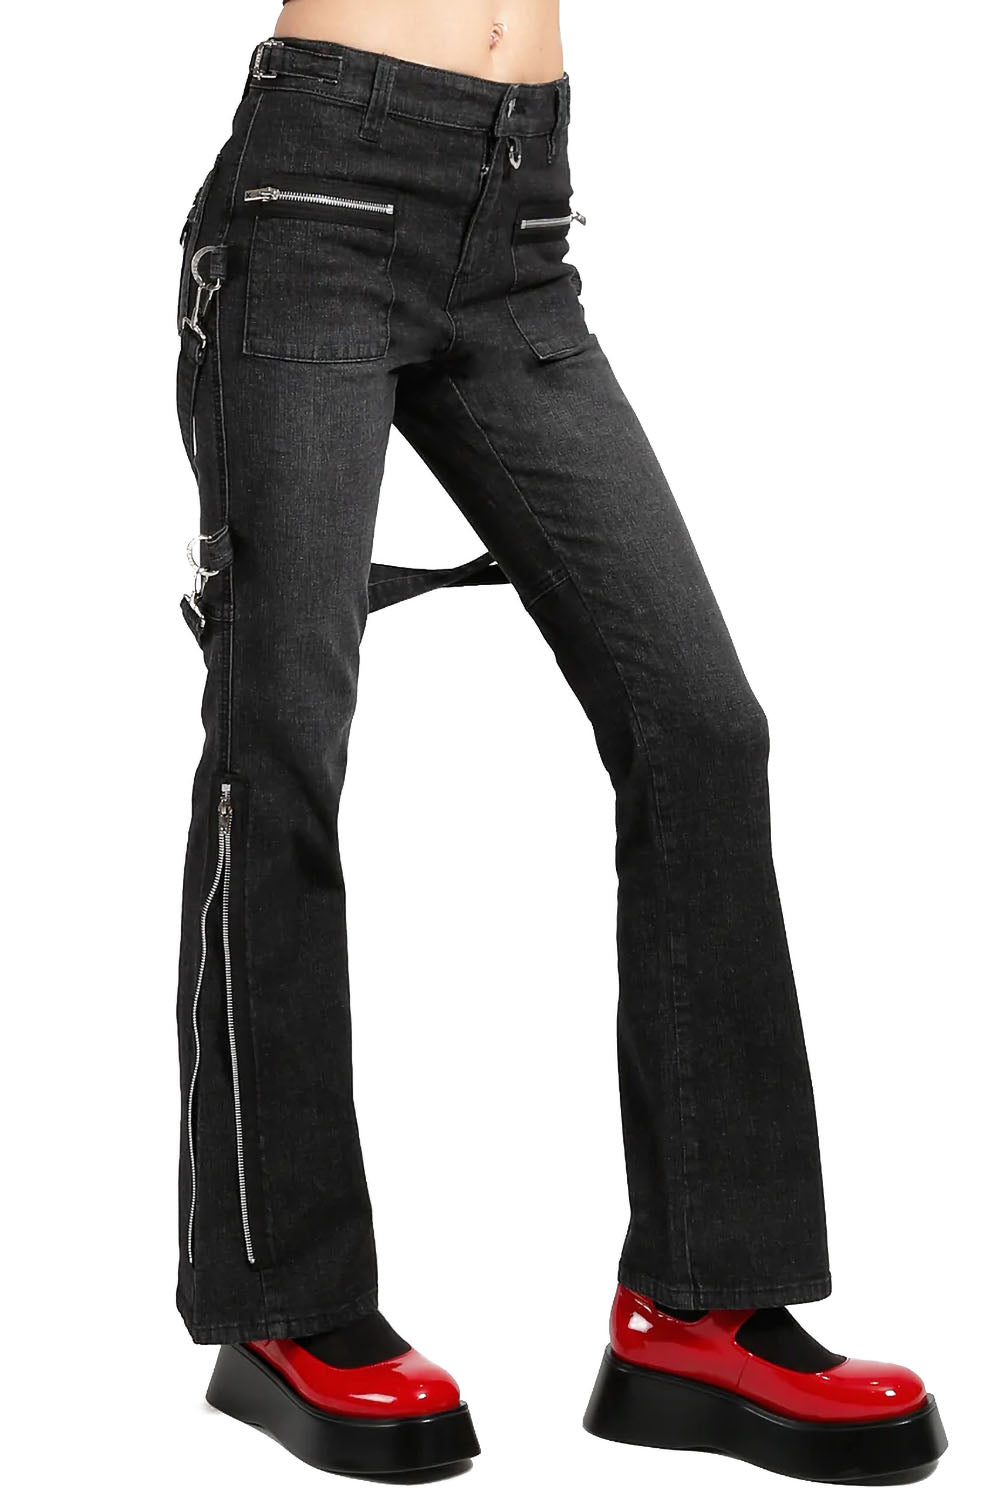 Tripp NYC Night Rider Jeans [BLACK DENIM]